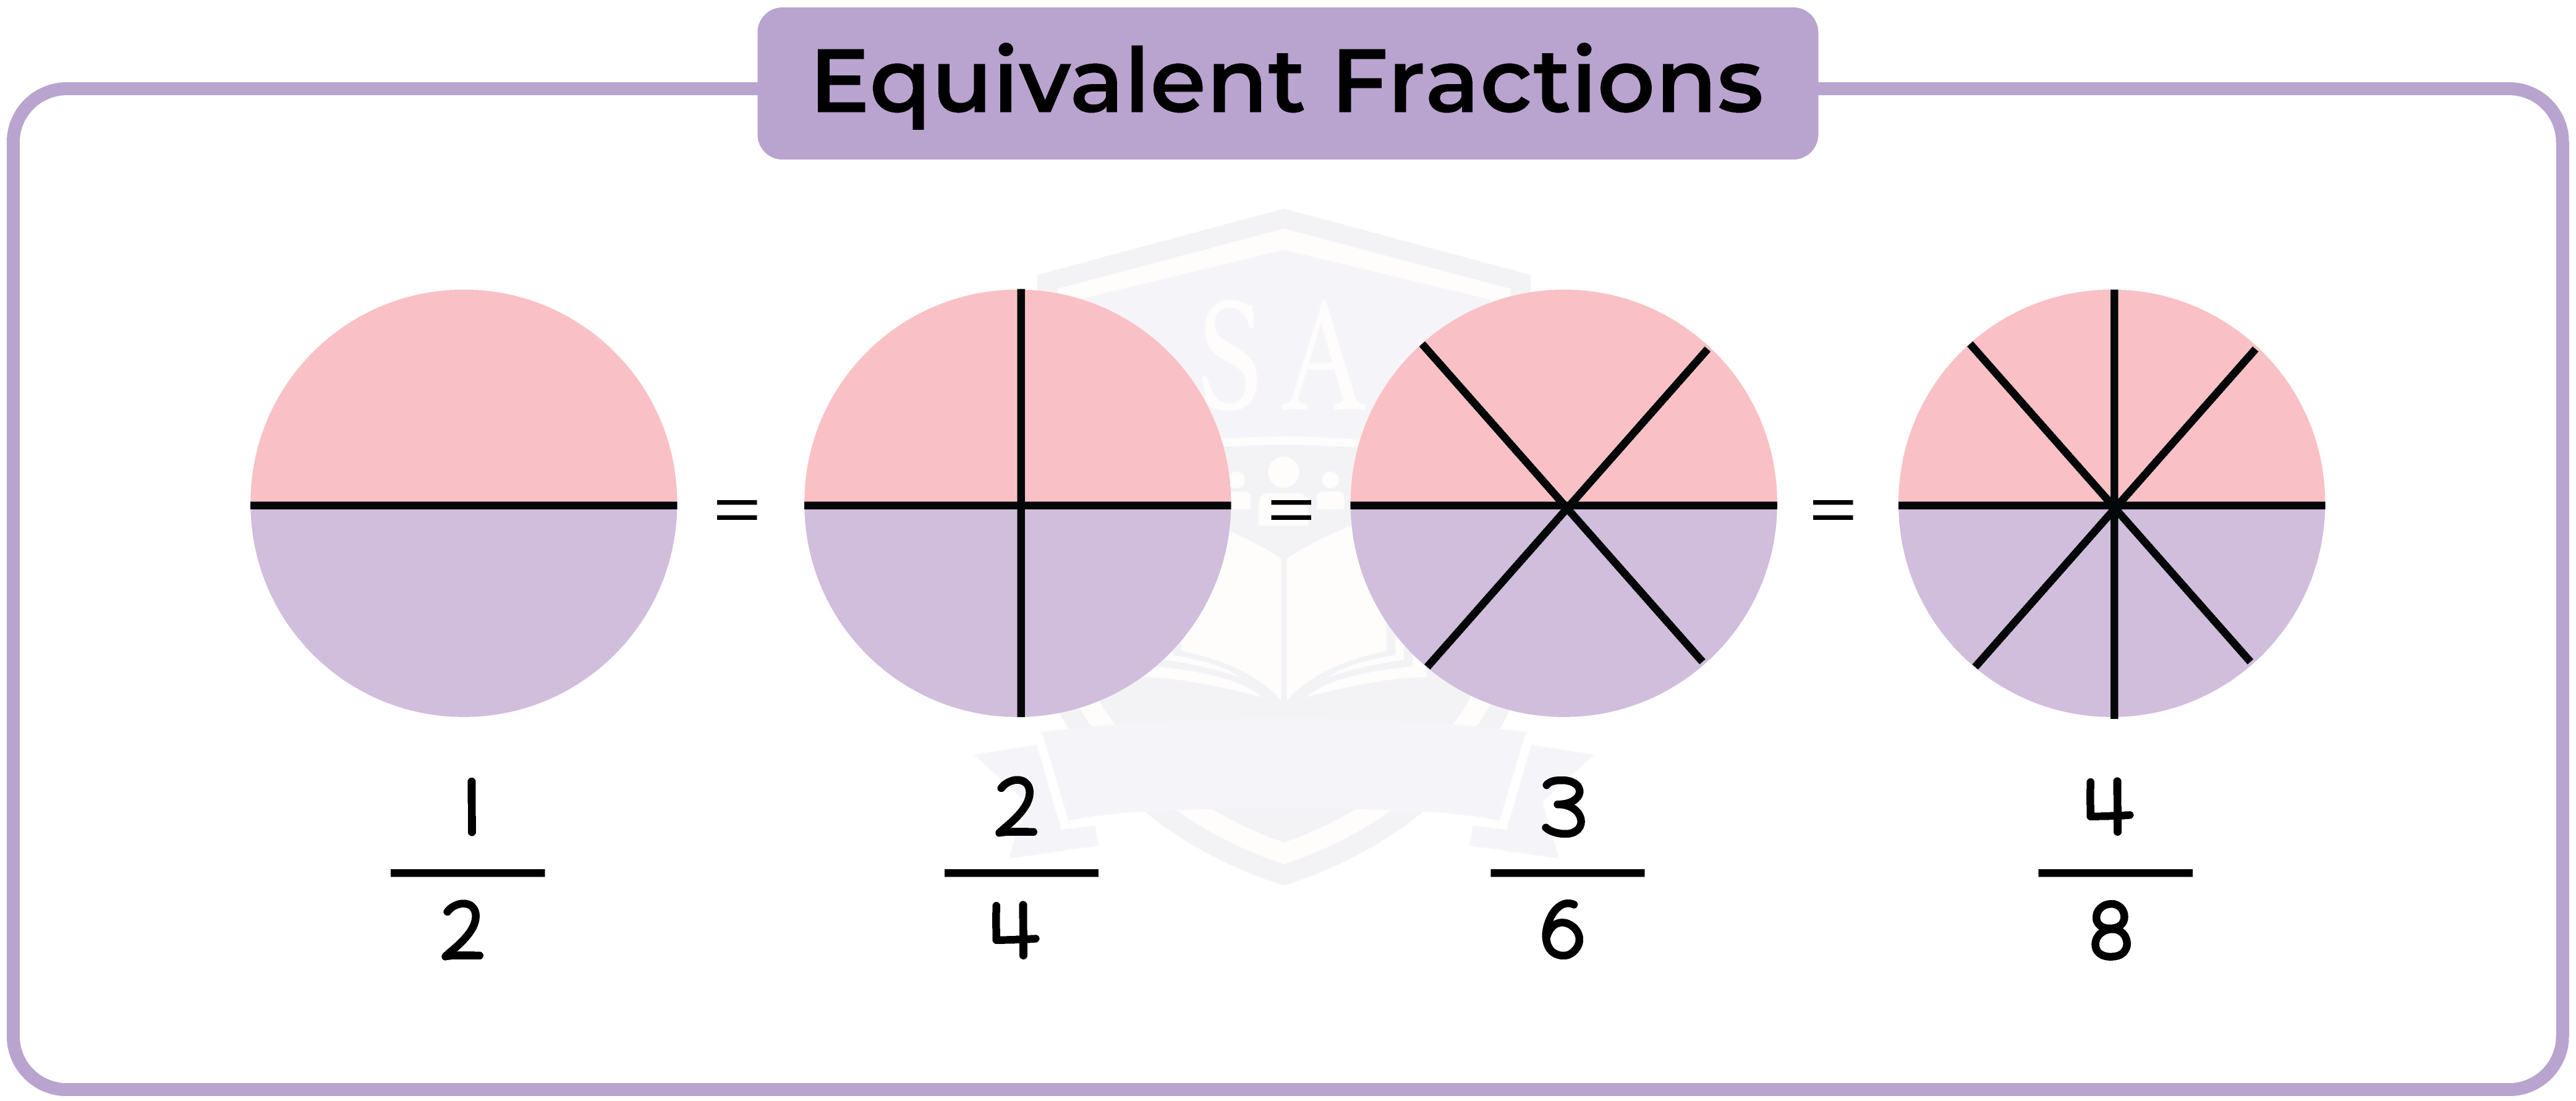 edexcel_igcse_mathematics a_topic 02_fractions_001_equivalent fraction